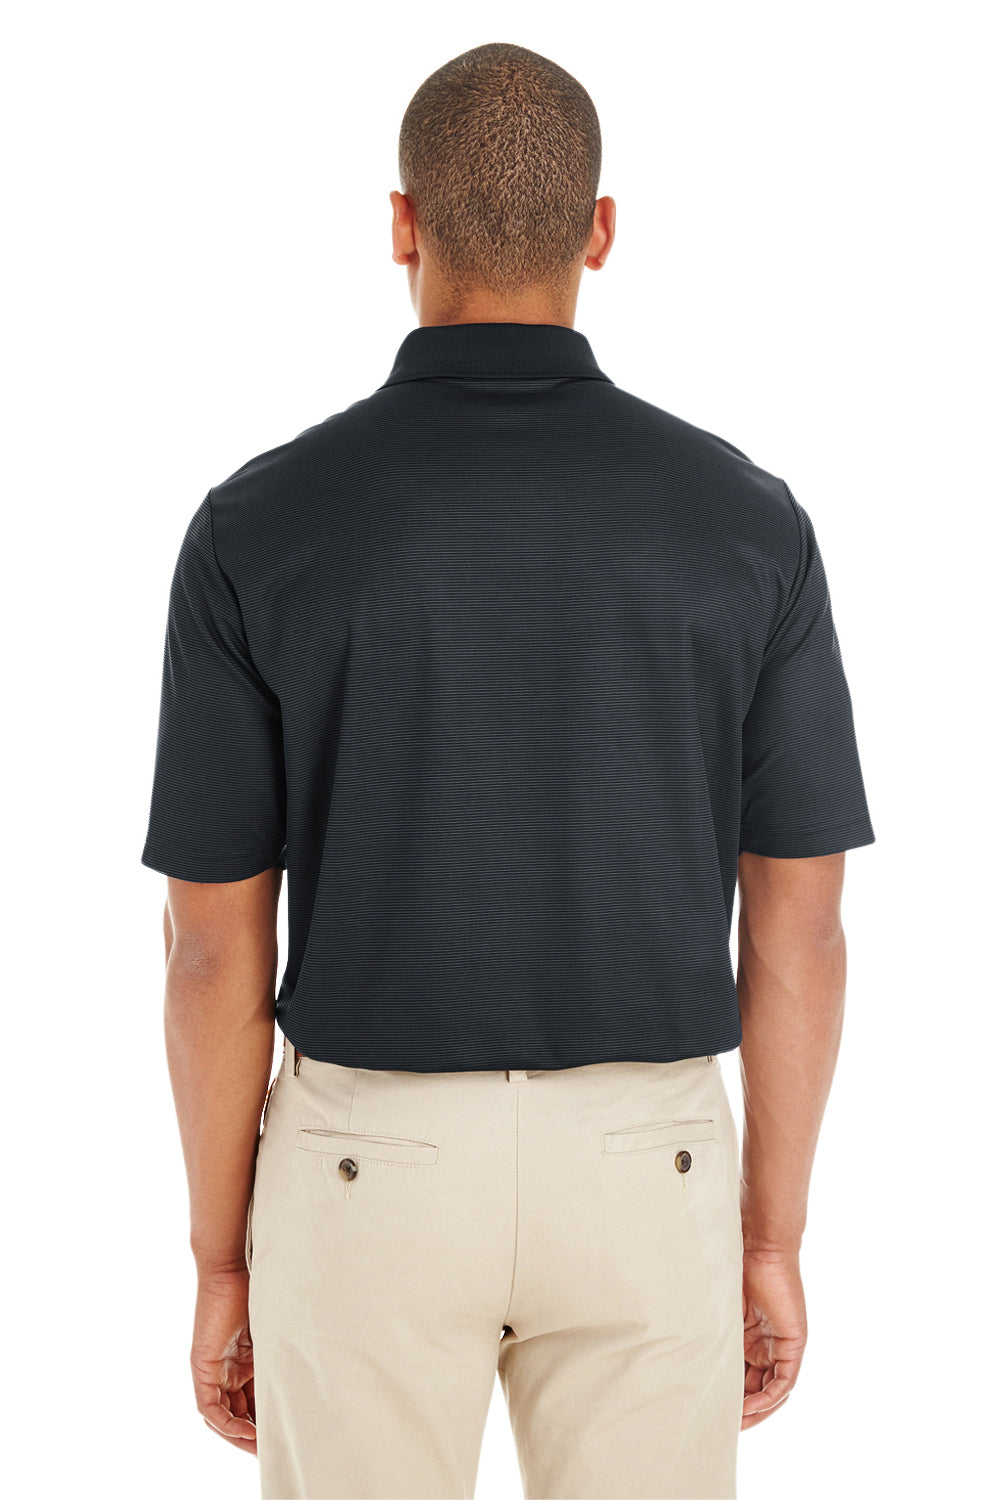 Core 365 CE102 Mens Express Performance Moisture Wicking Short Sleeve Polo Shirt Black Back